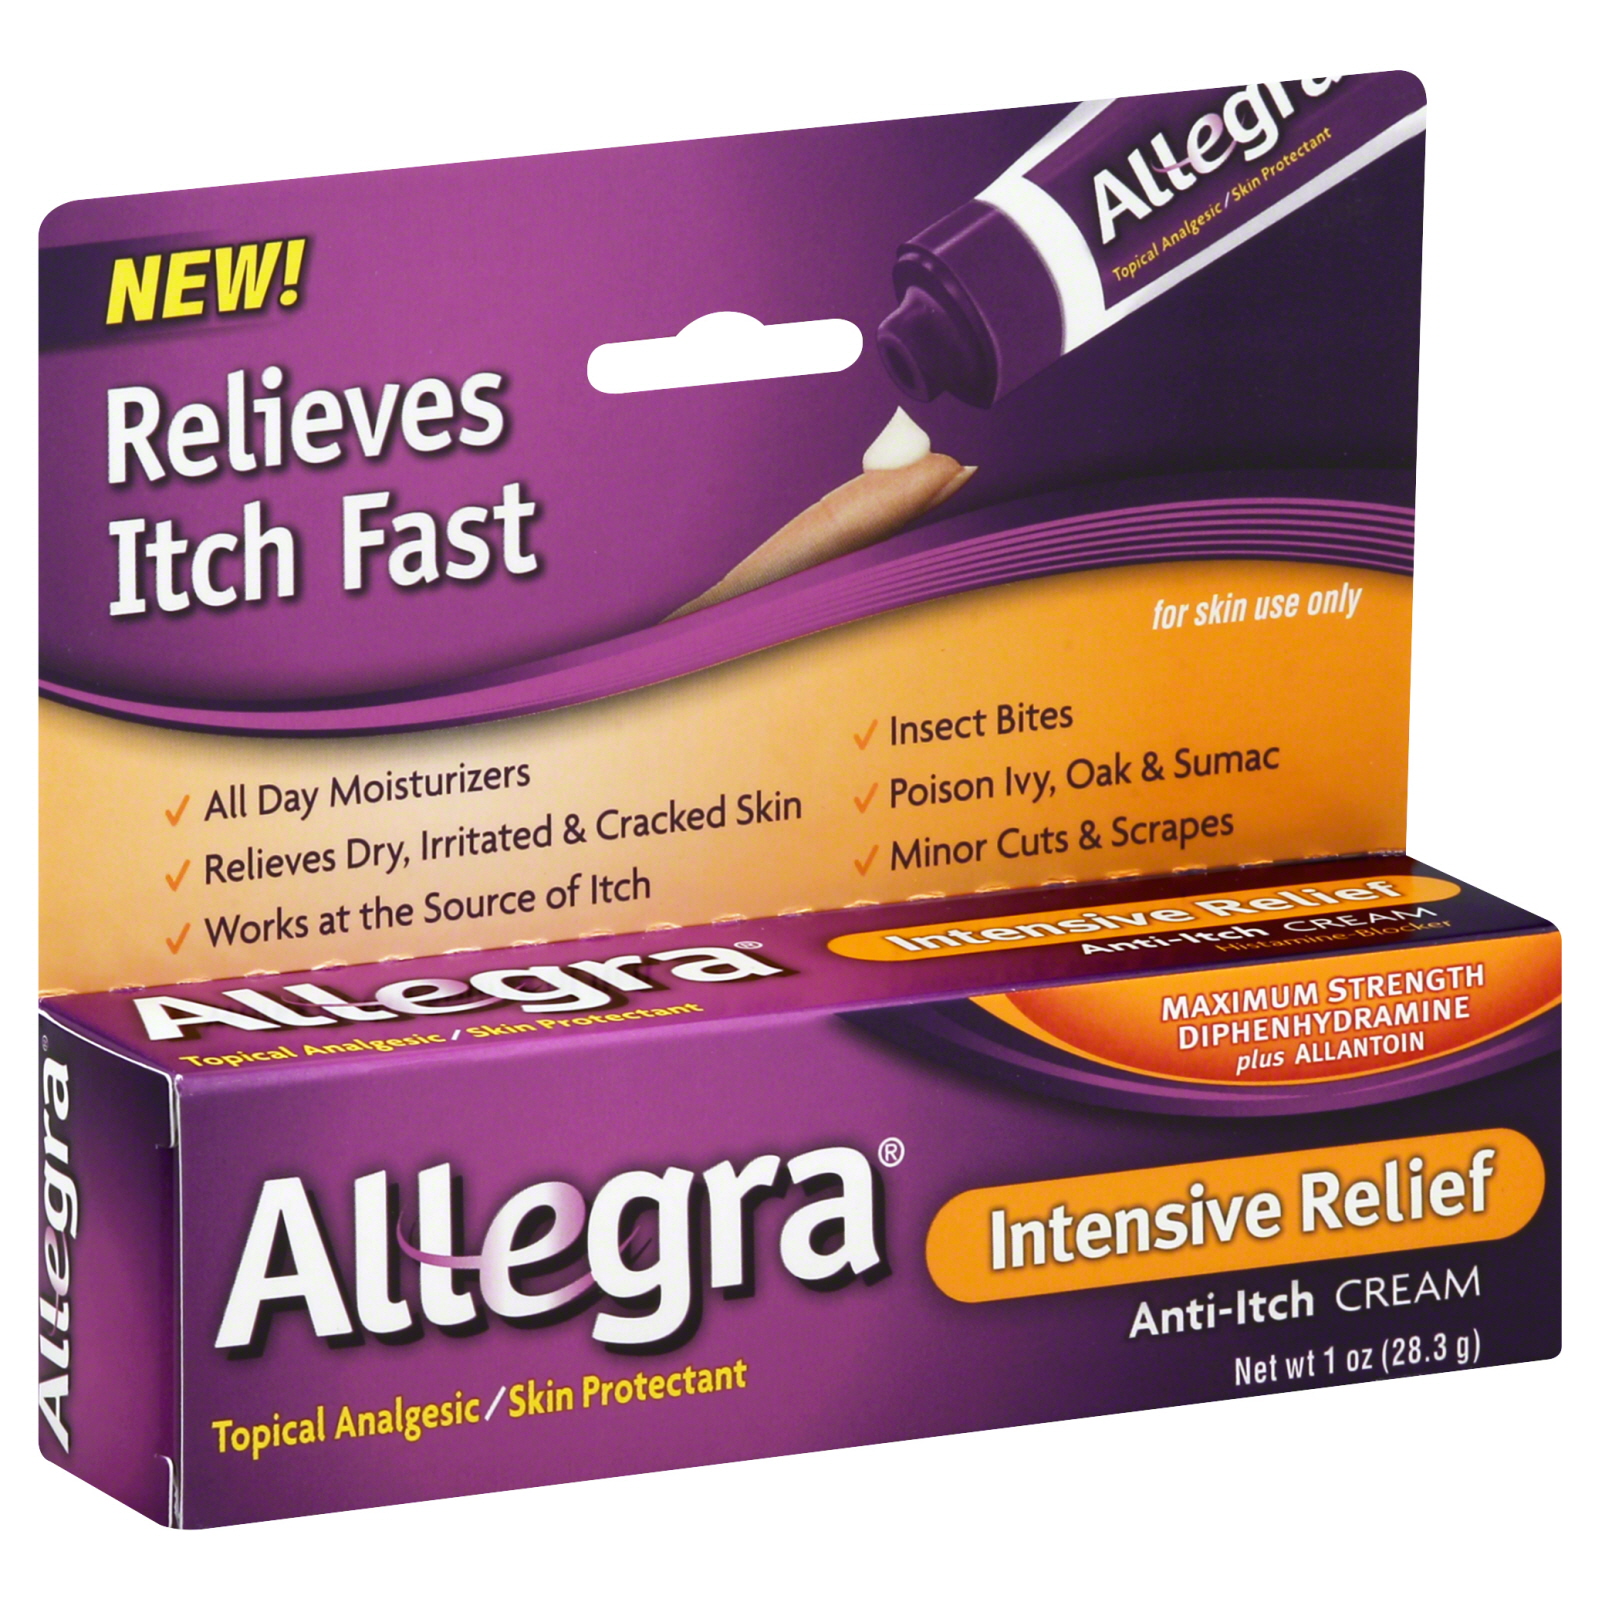 Allegra Intensive Relief Anti-Itch Cream, 1 oz